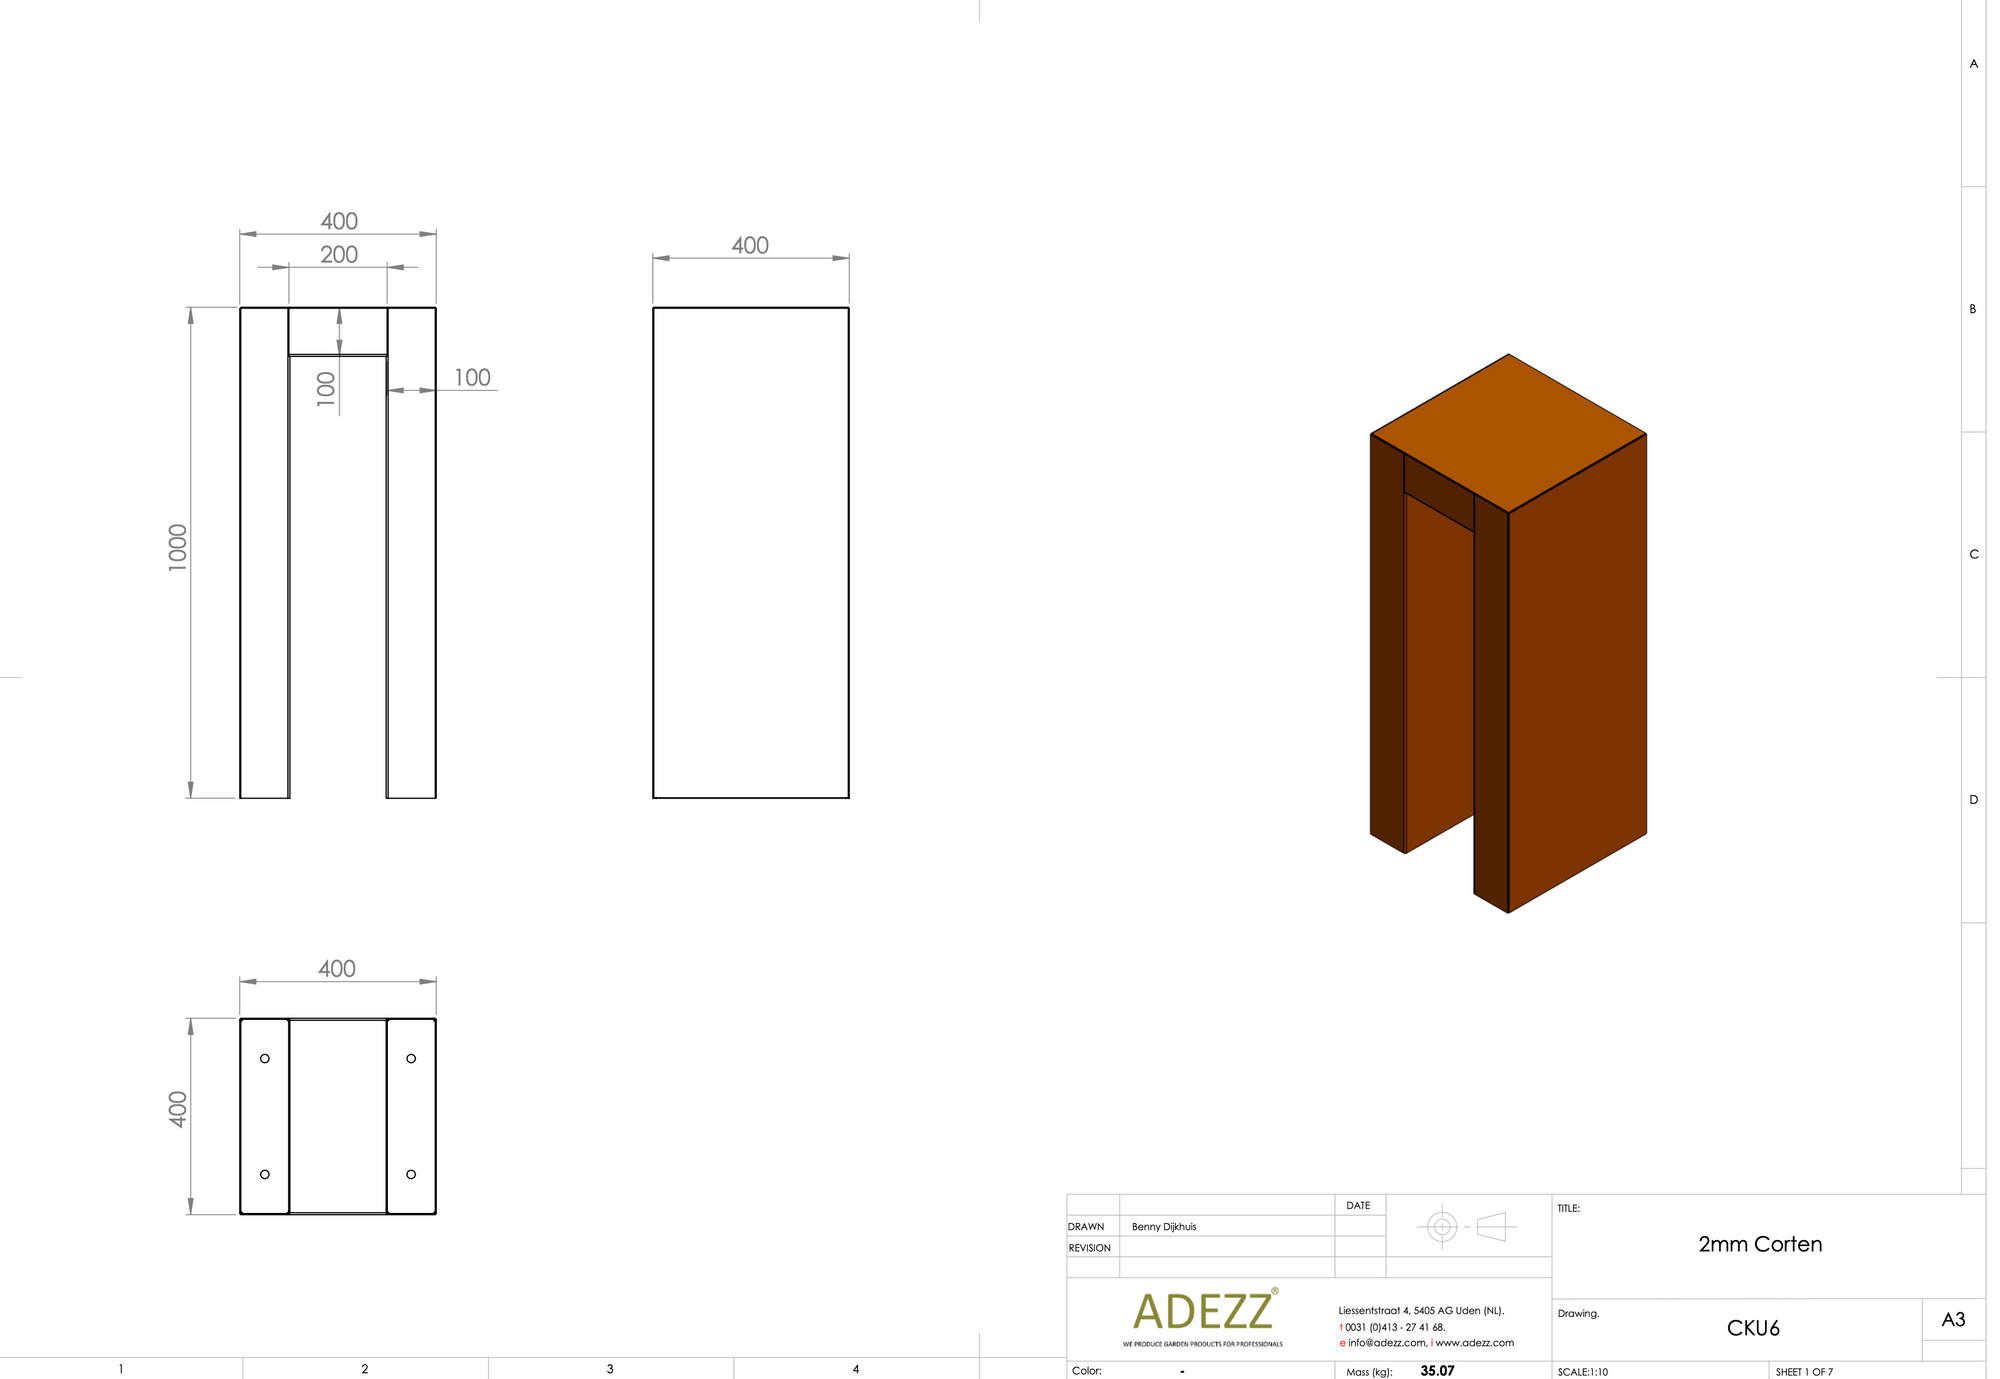 Adezz U-shaped base made of Corten steel 